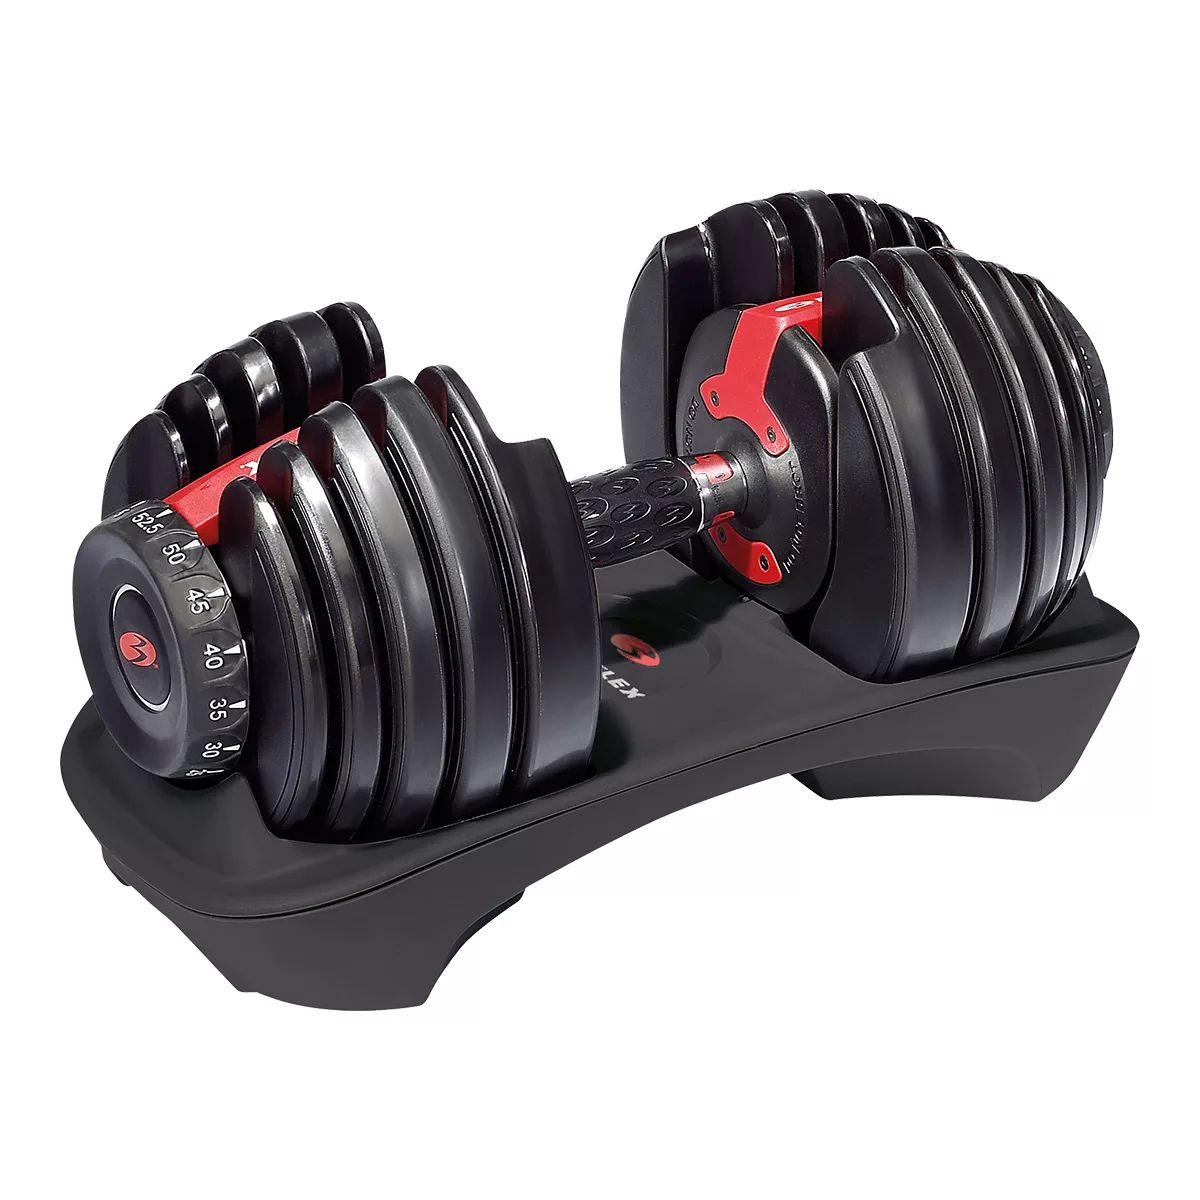 Bowflex SelectTech 552 Adjustable Dumbbell  Weight  Home Gym